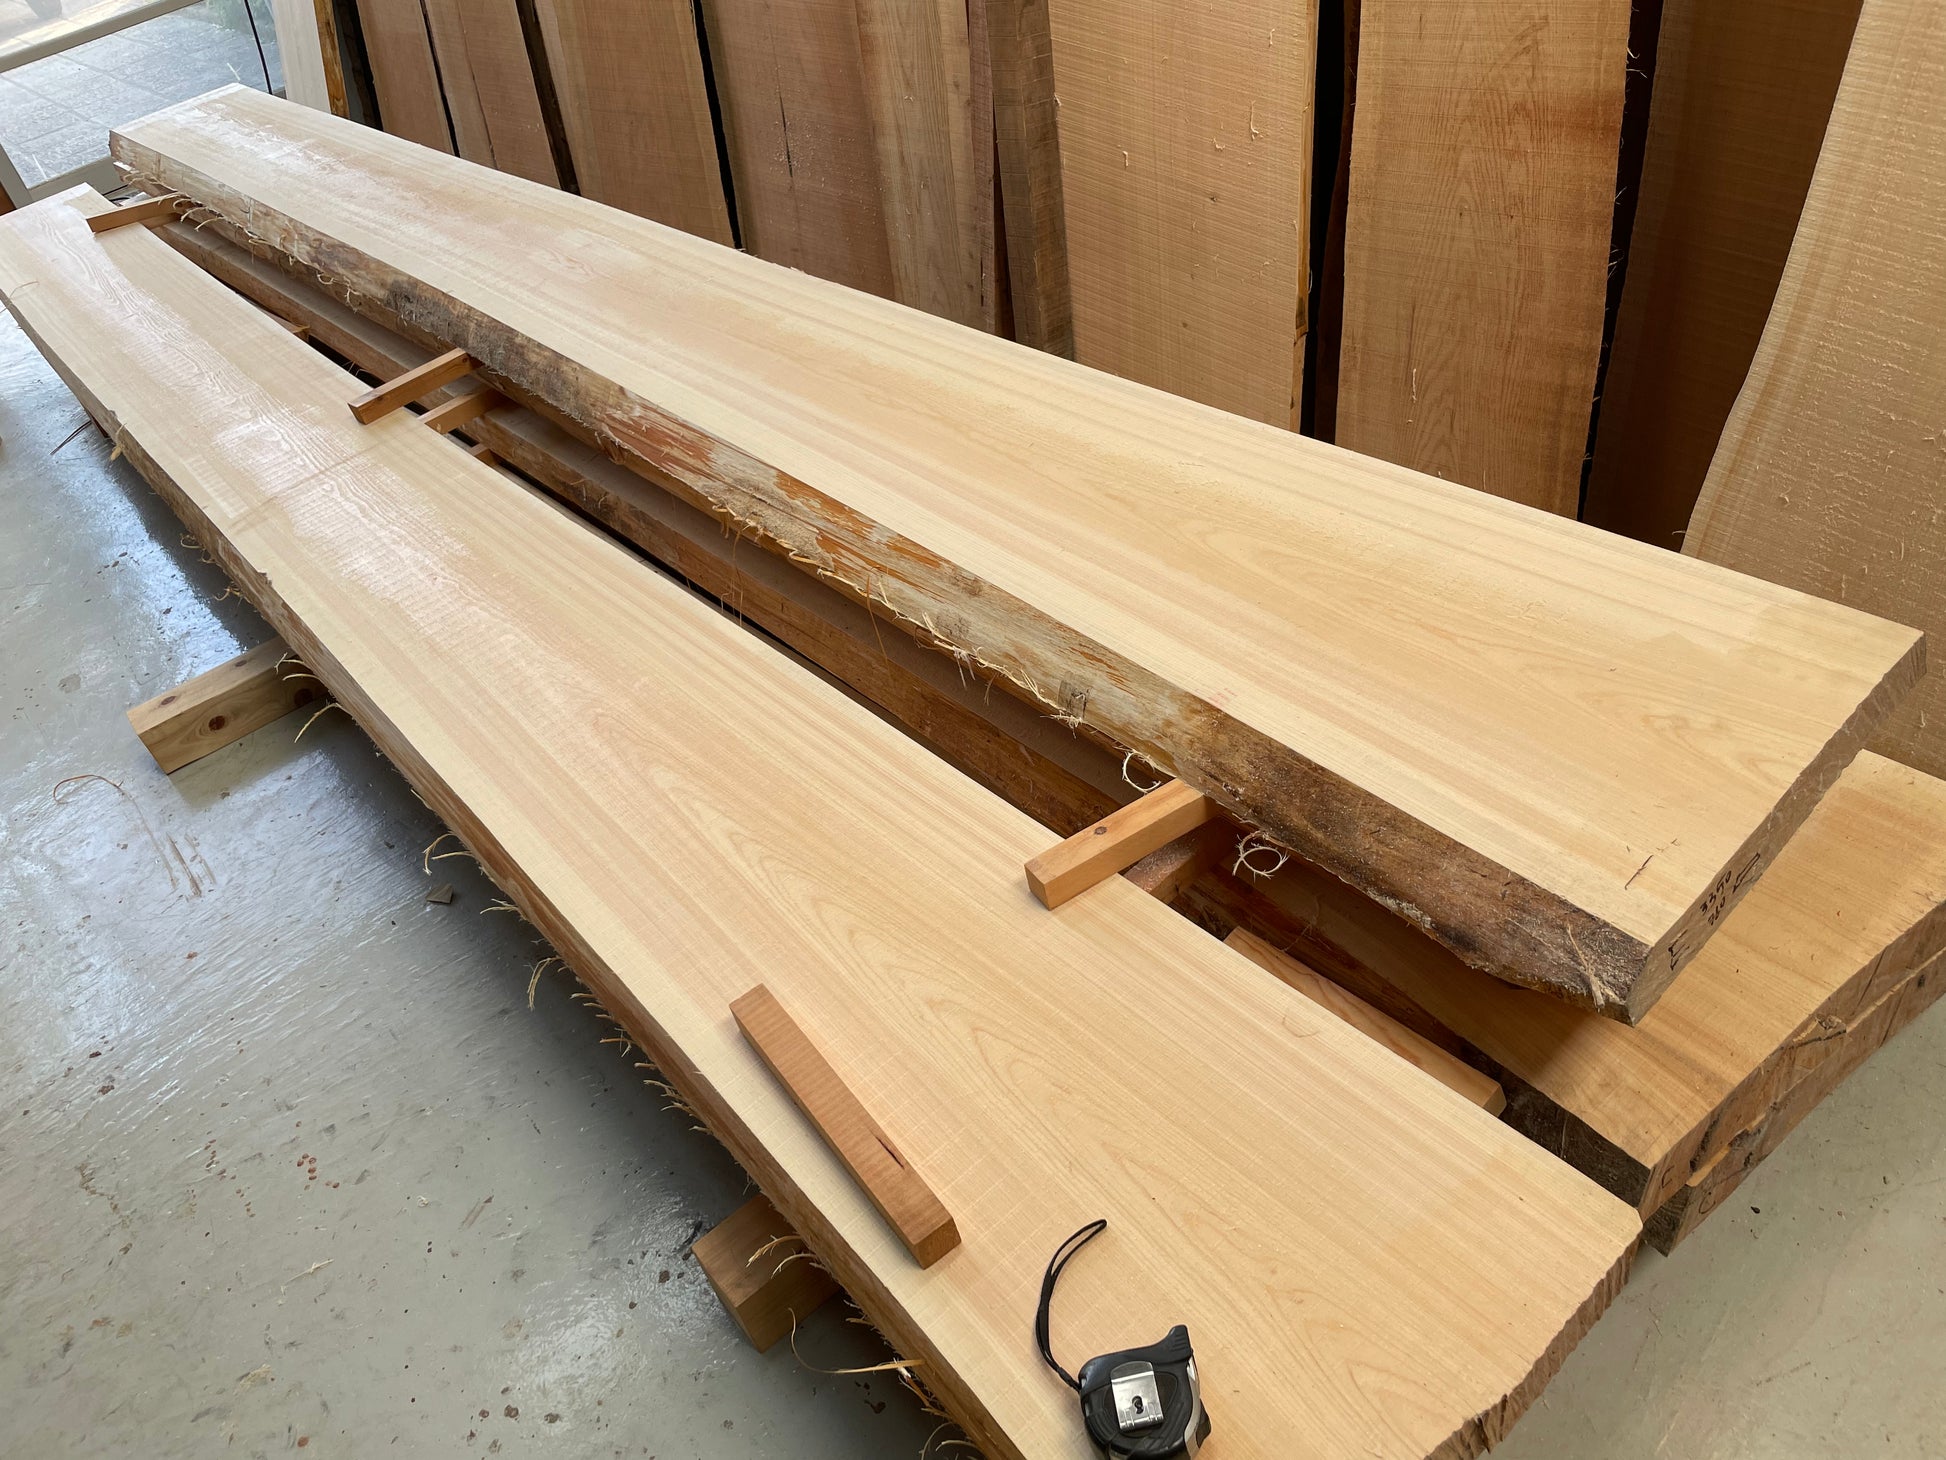 Kodai Hinoki Japanese Cypress Wood Cutting Board, Large